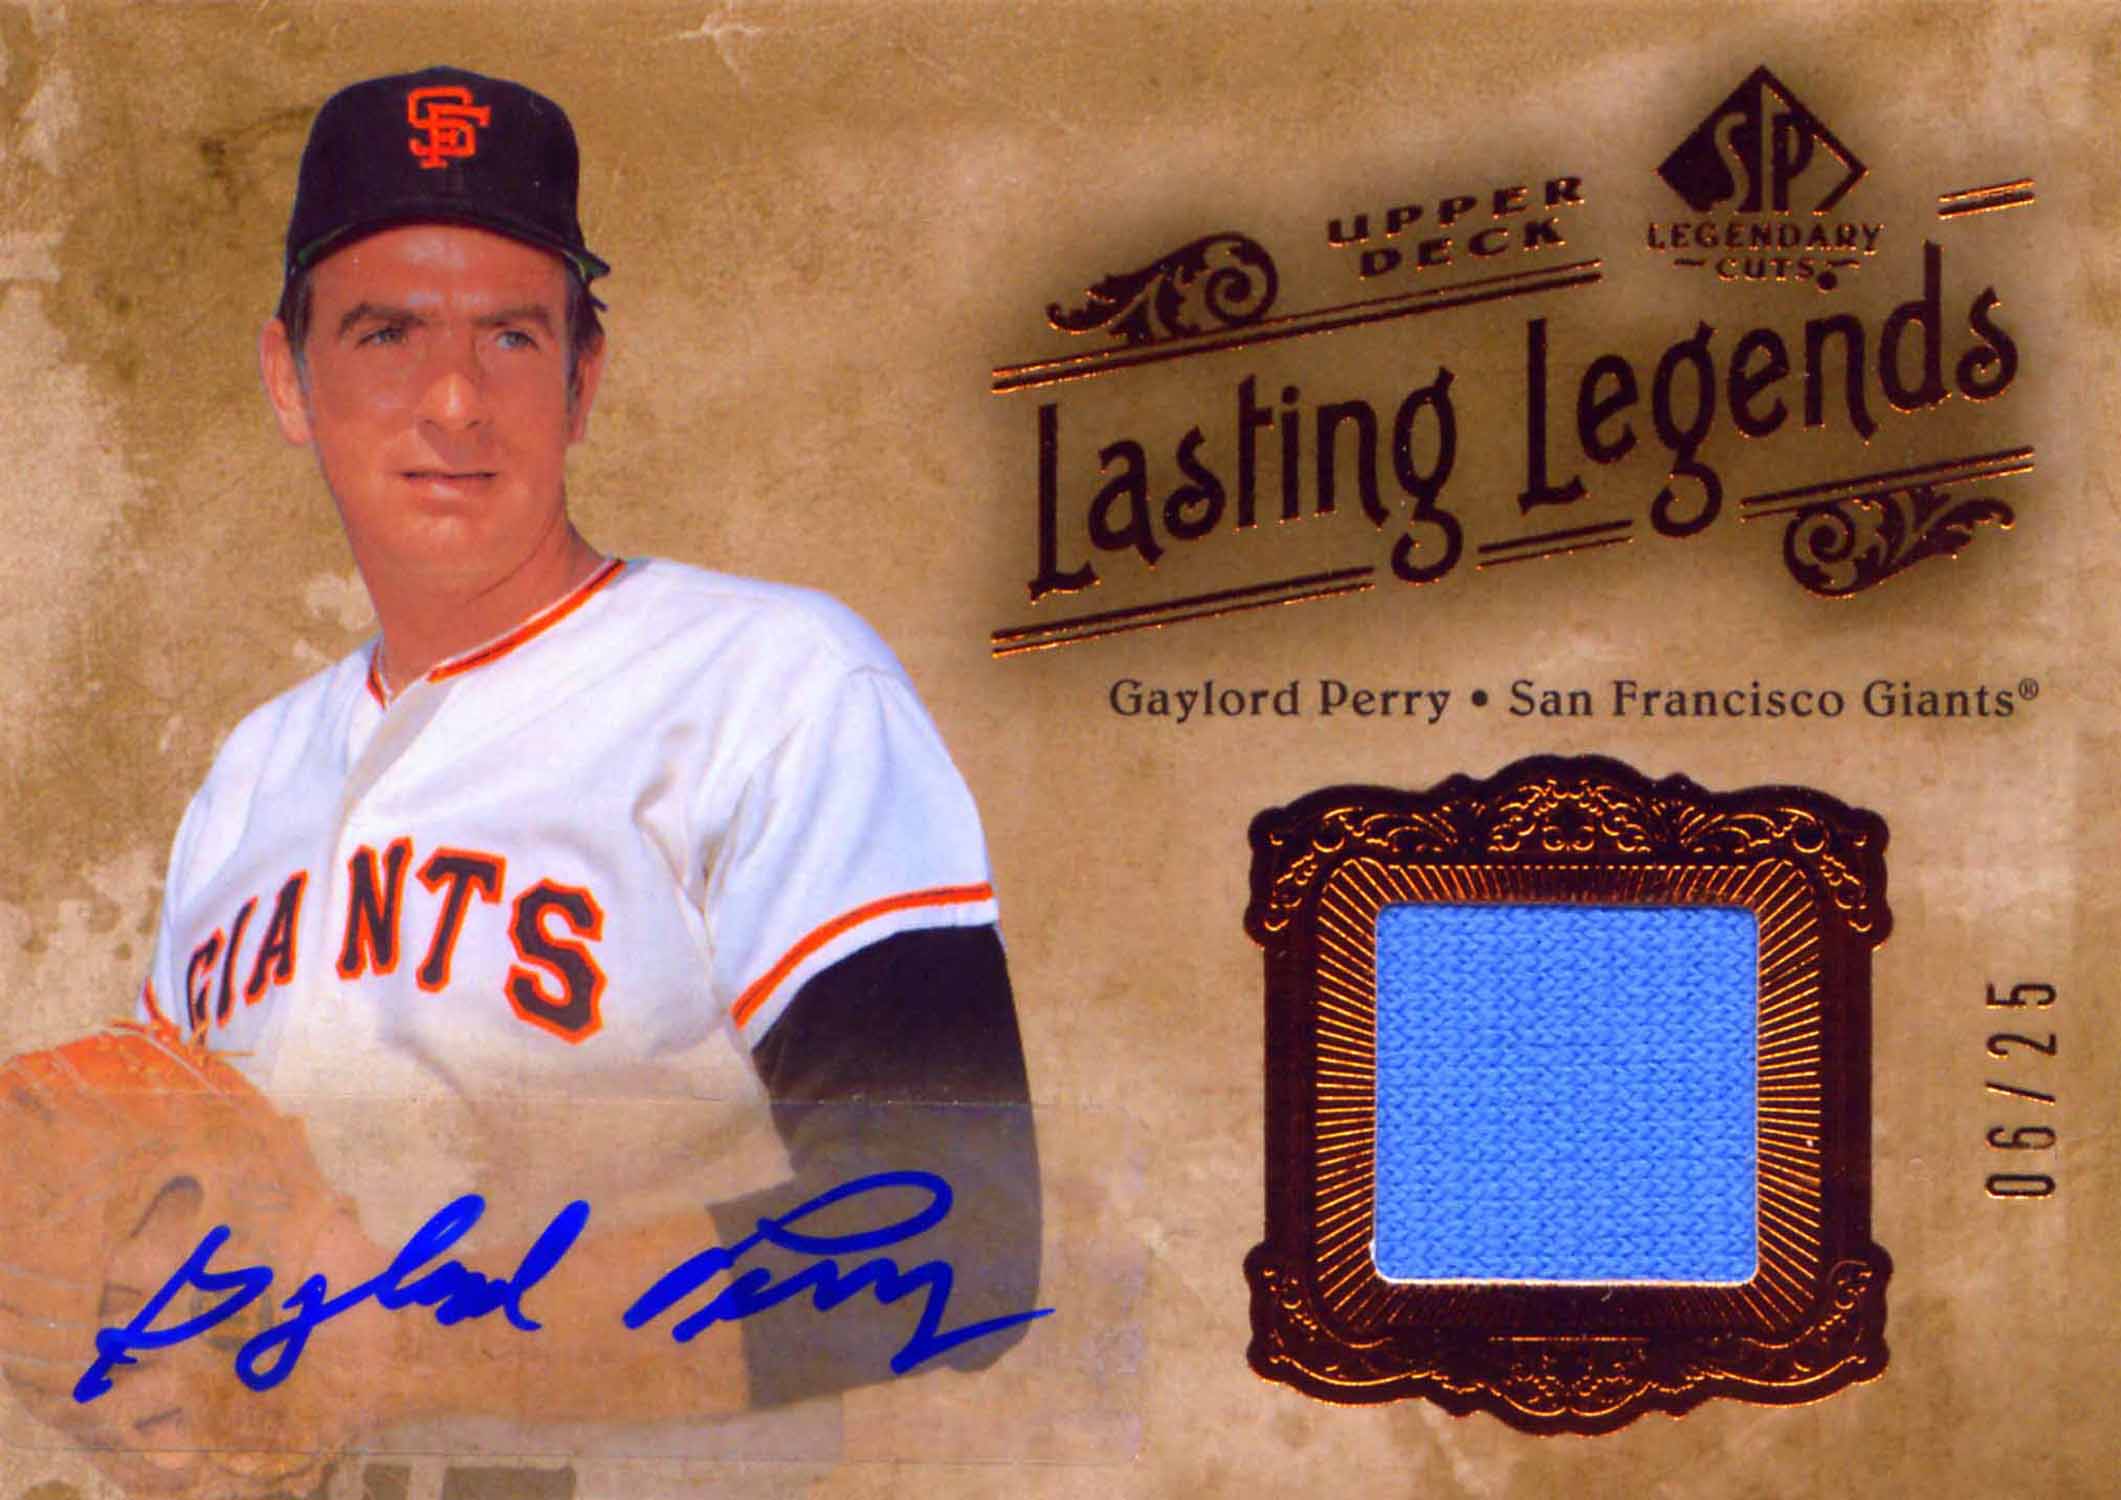 2005 SP Legendary Cuts Lasting Legends Autograph Material Jersey